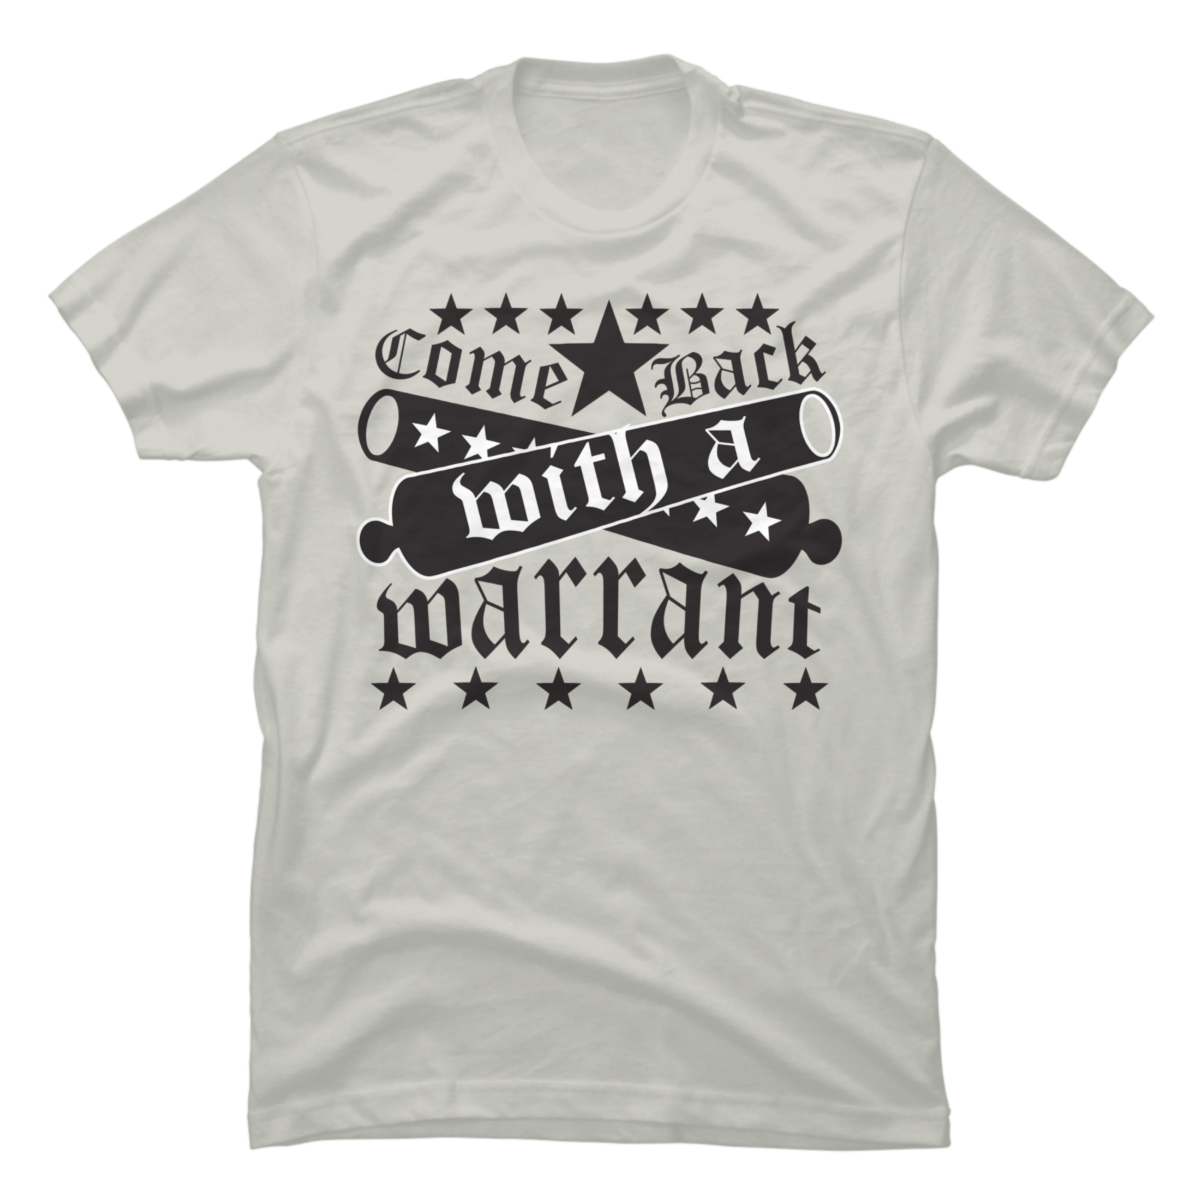 warrant shirt